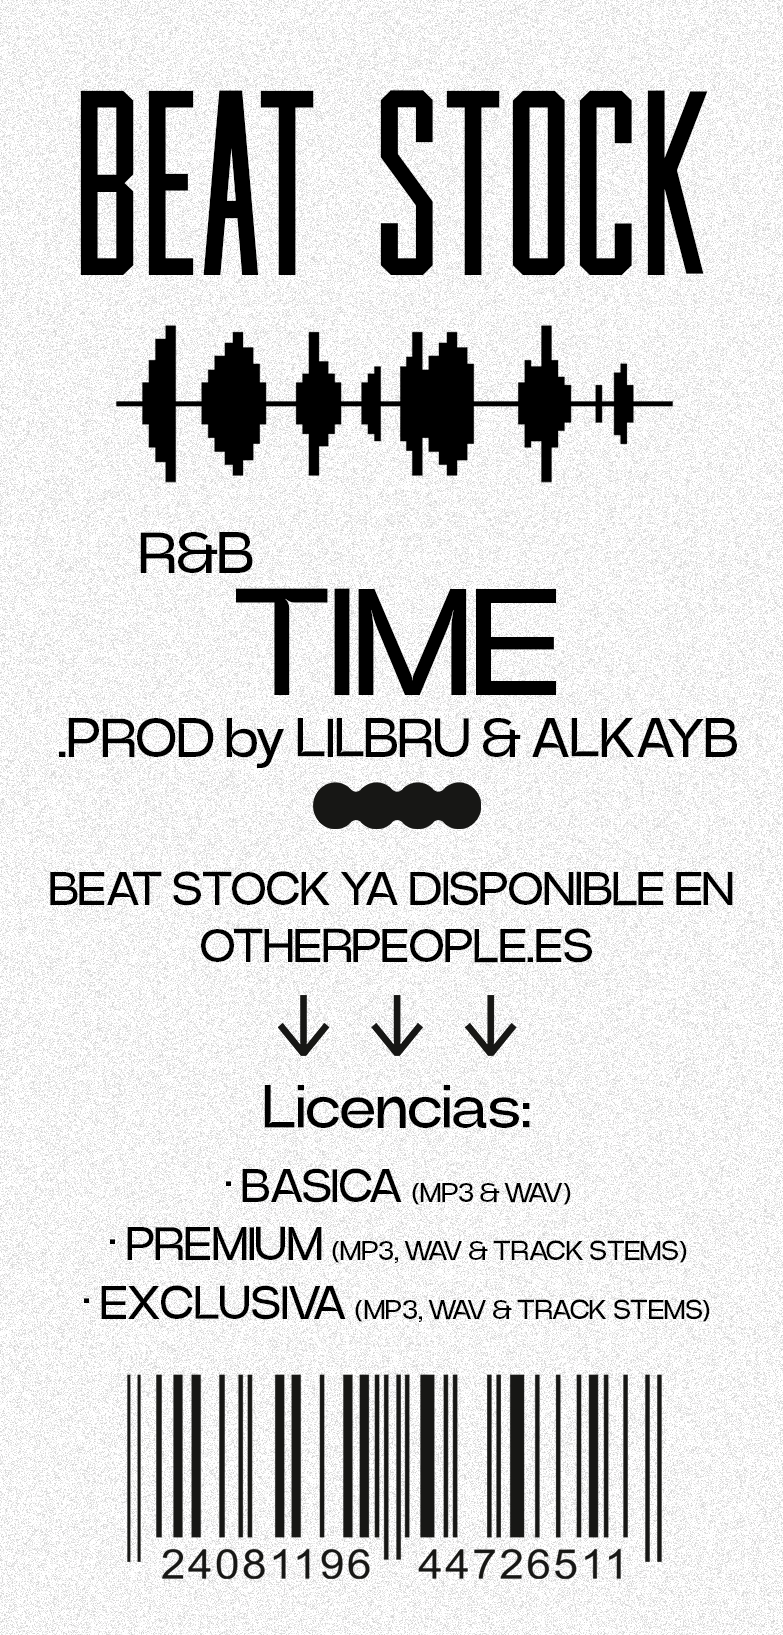 TIME [R&B BEAT] (PROD. LILBRU & ALKA YB)